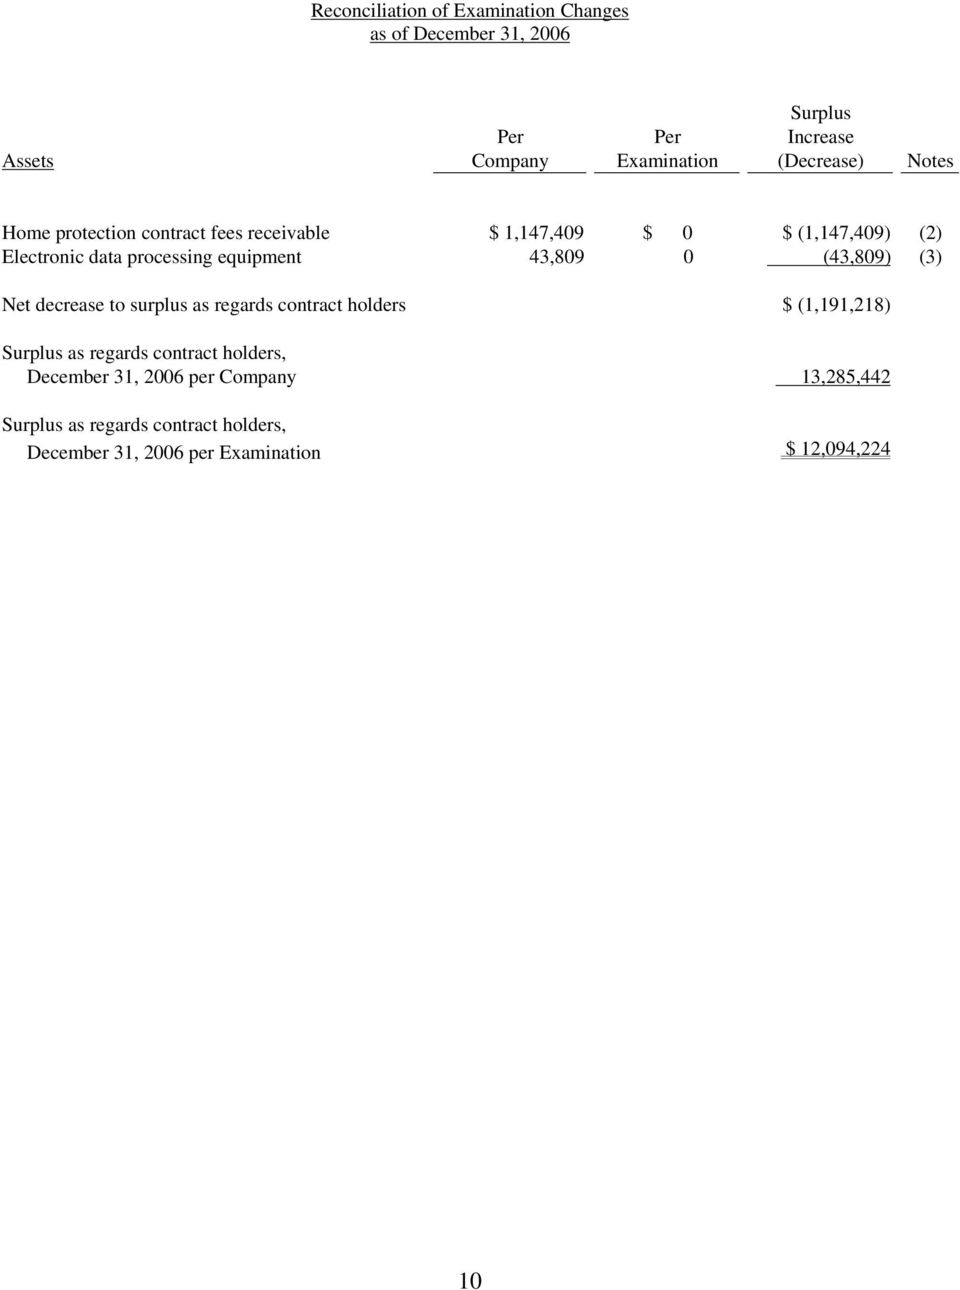 equipment 43,809 0 (43,809) (3) Net decrease to surplus as regards contract holders $ (1,191,218) Surplus as regards